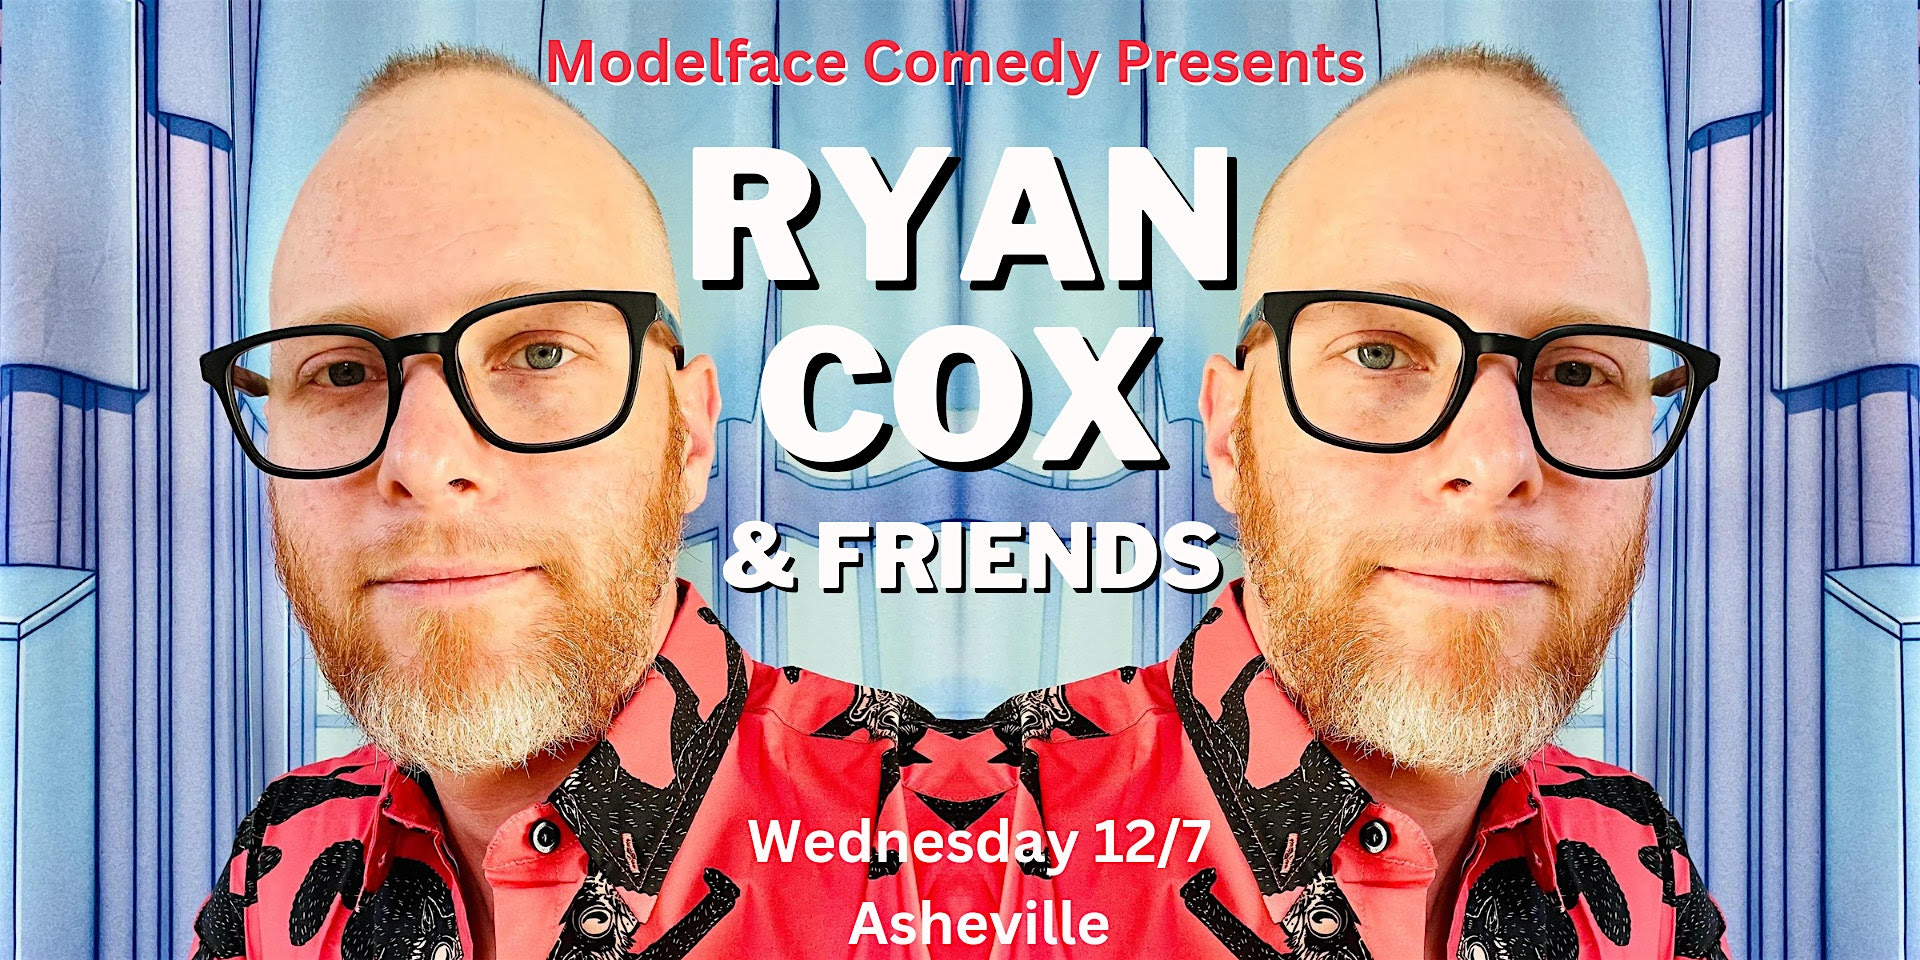 Beauty Parlor Comedy: Ryan Cox & Friends